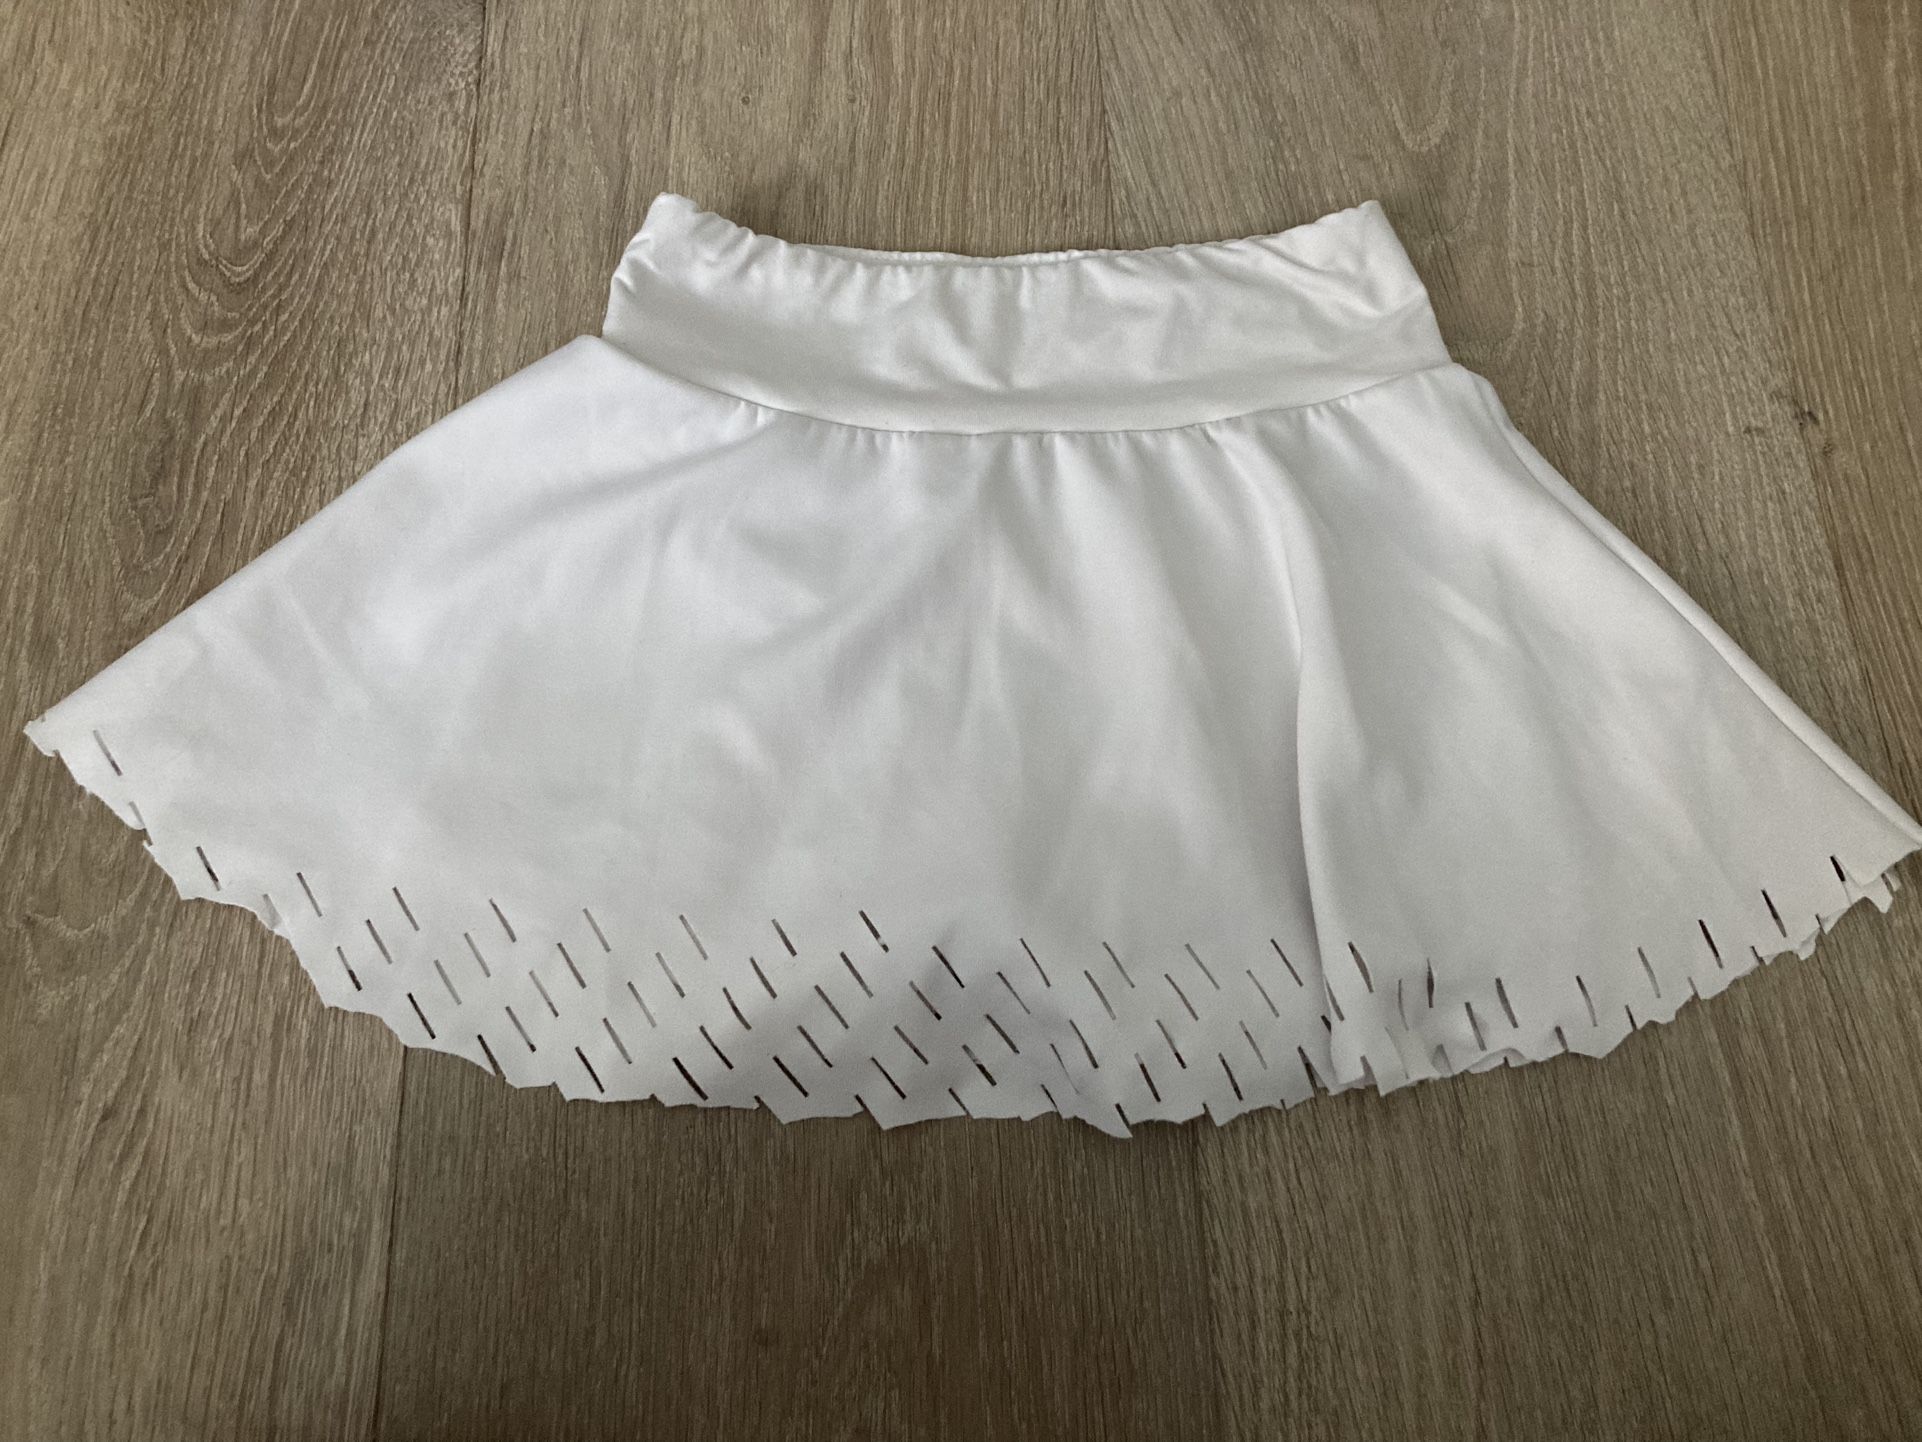 Adidas Skirt White 